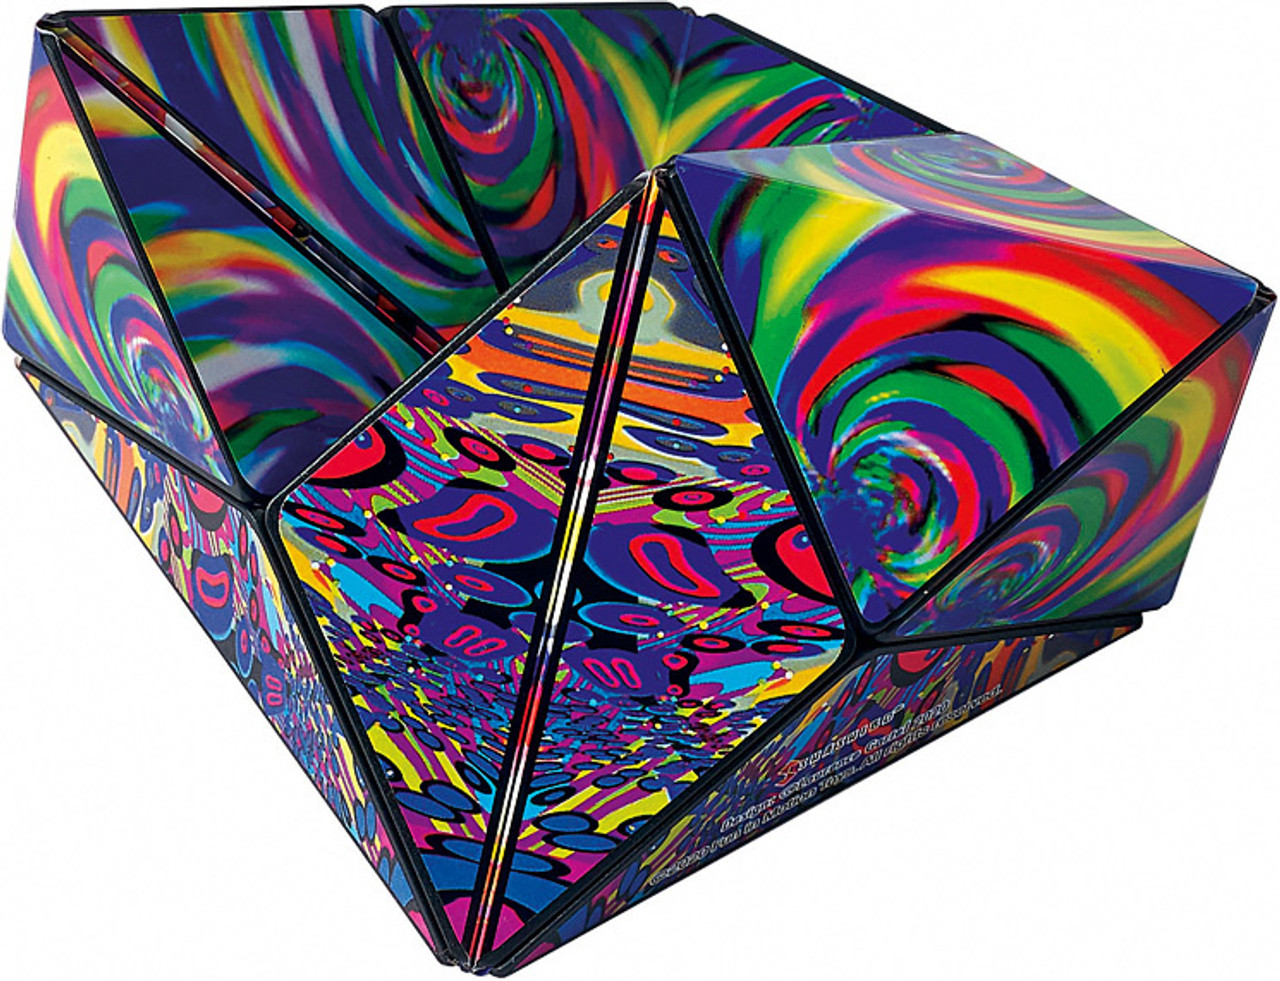 Shashibo - The Shape Shifting Box - Artist Series: Confetti 4